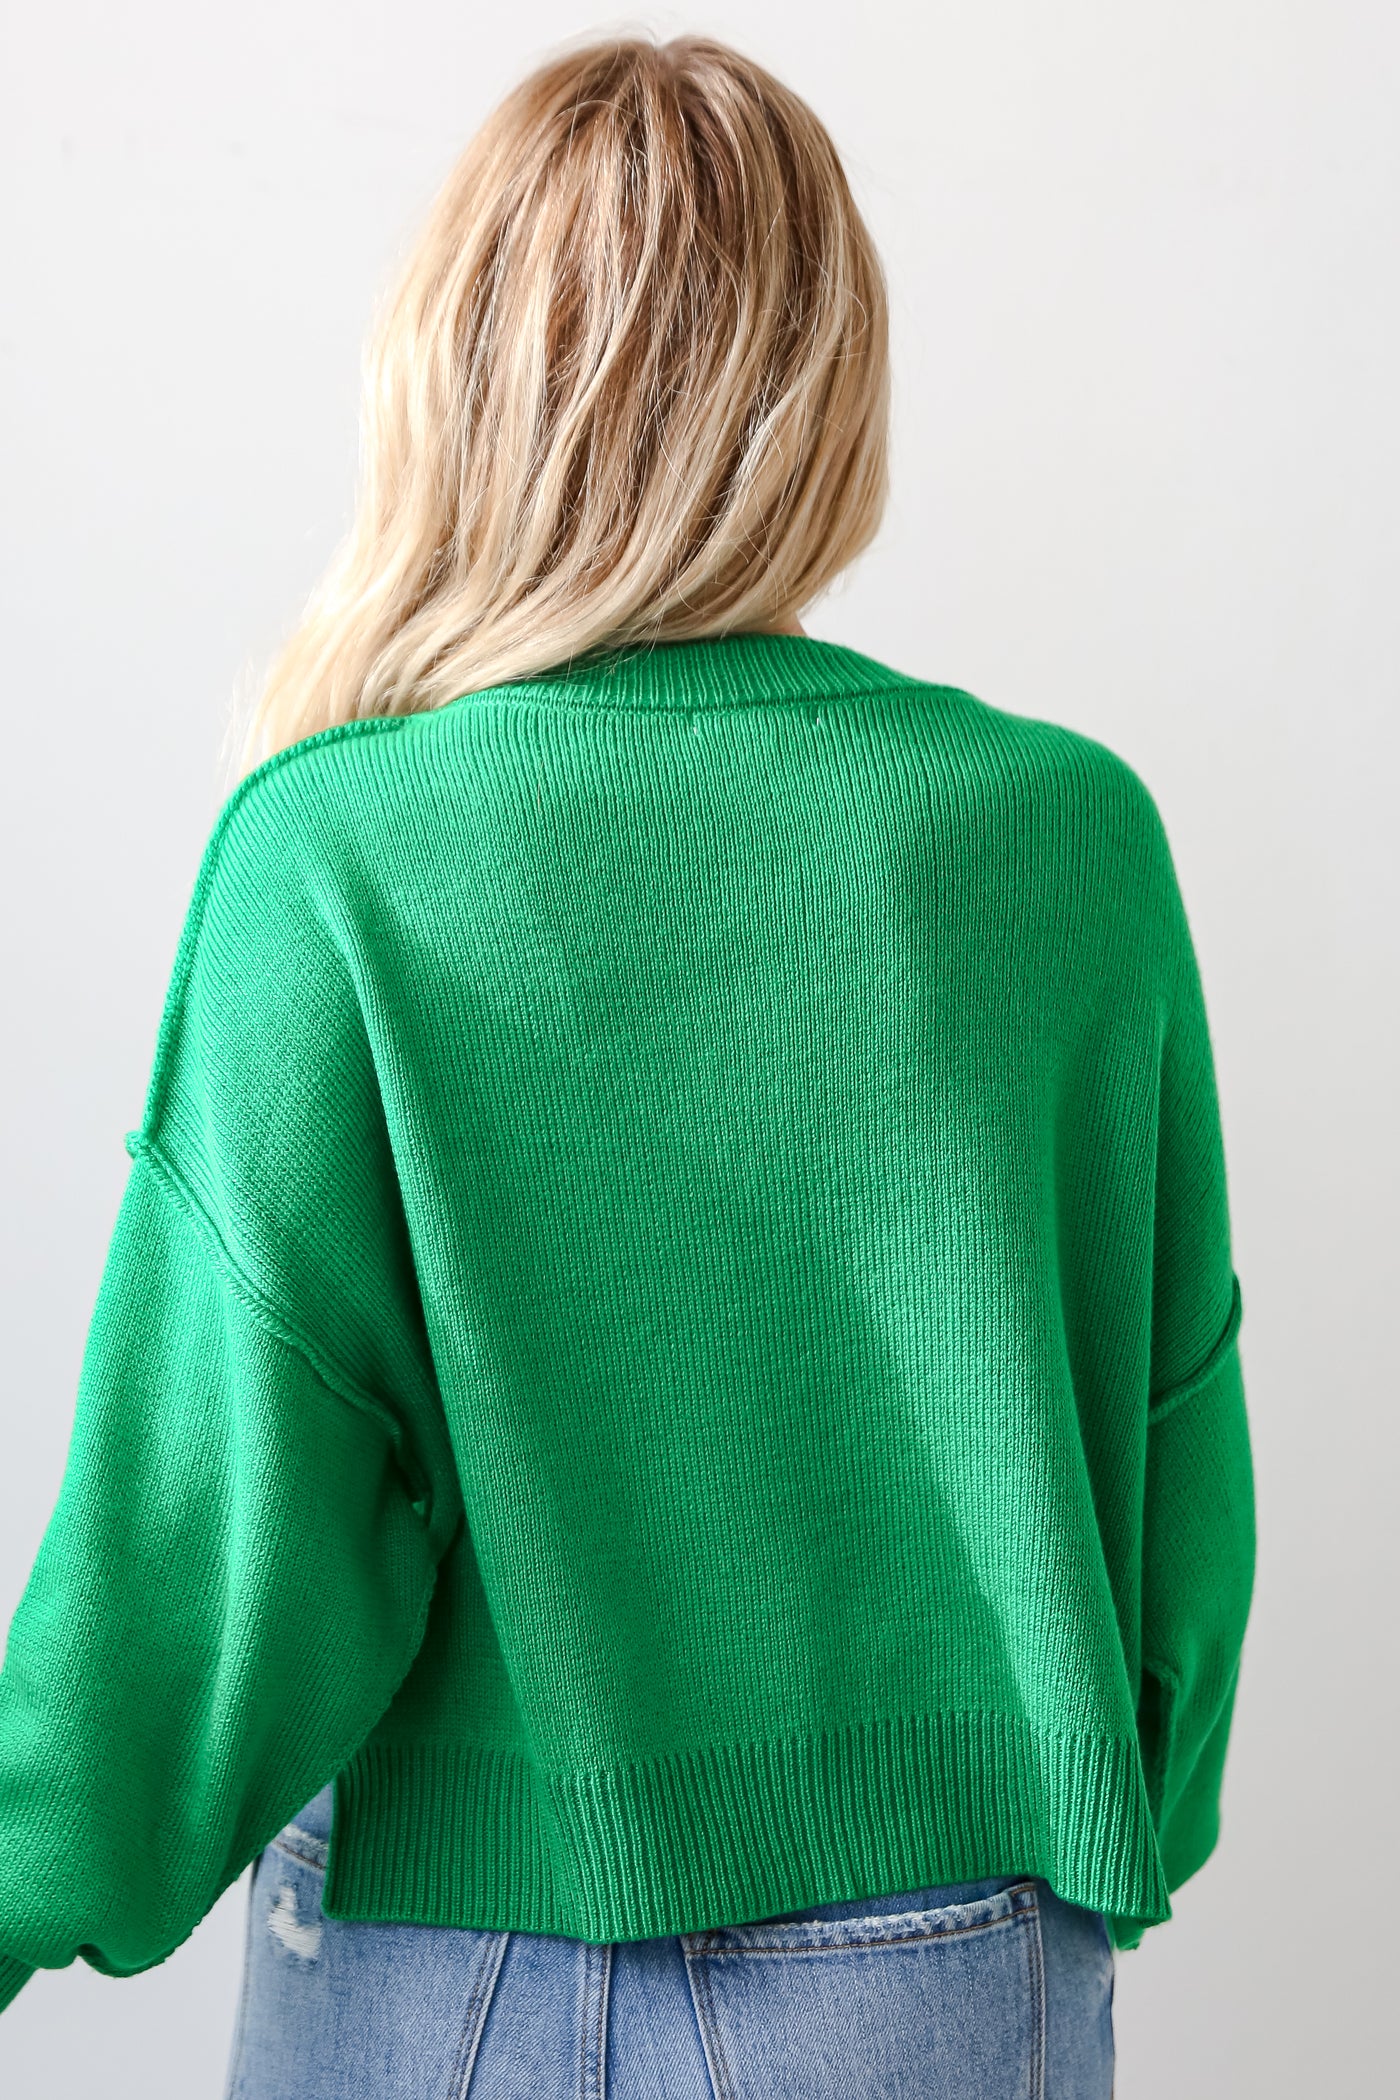 cute green sweater